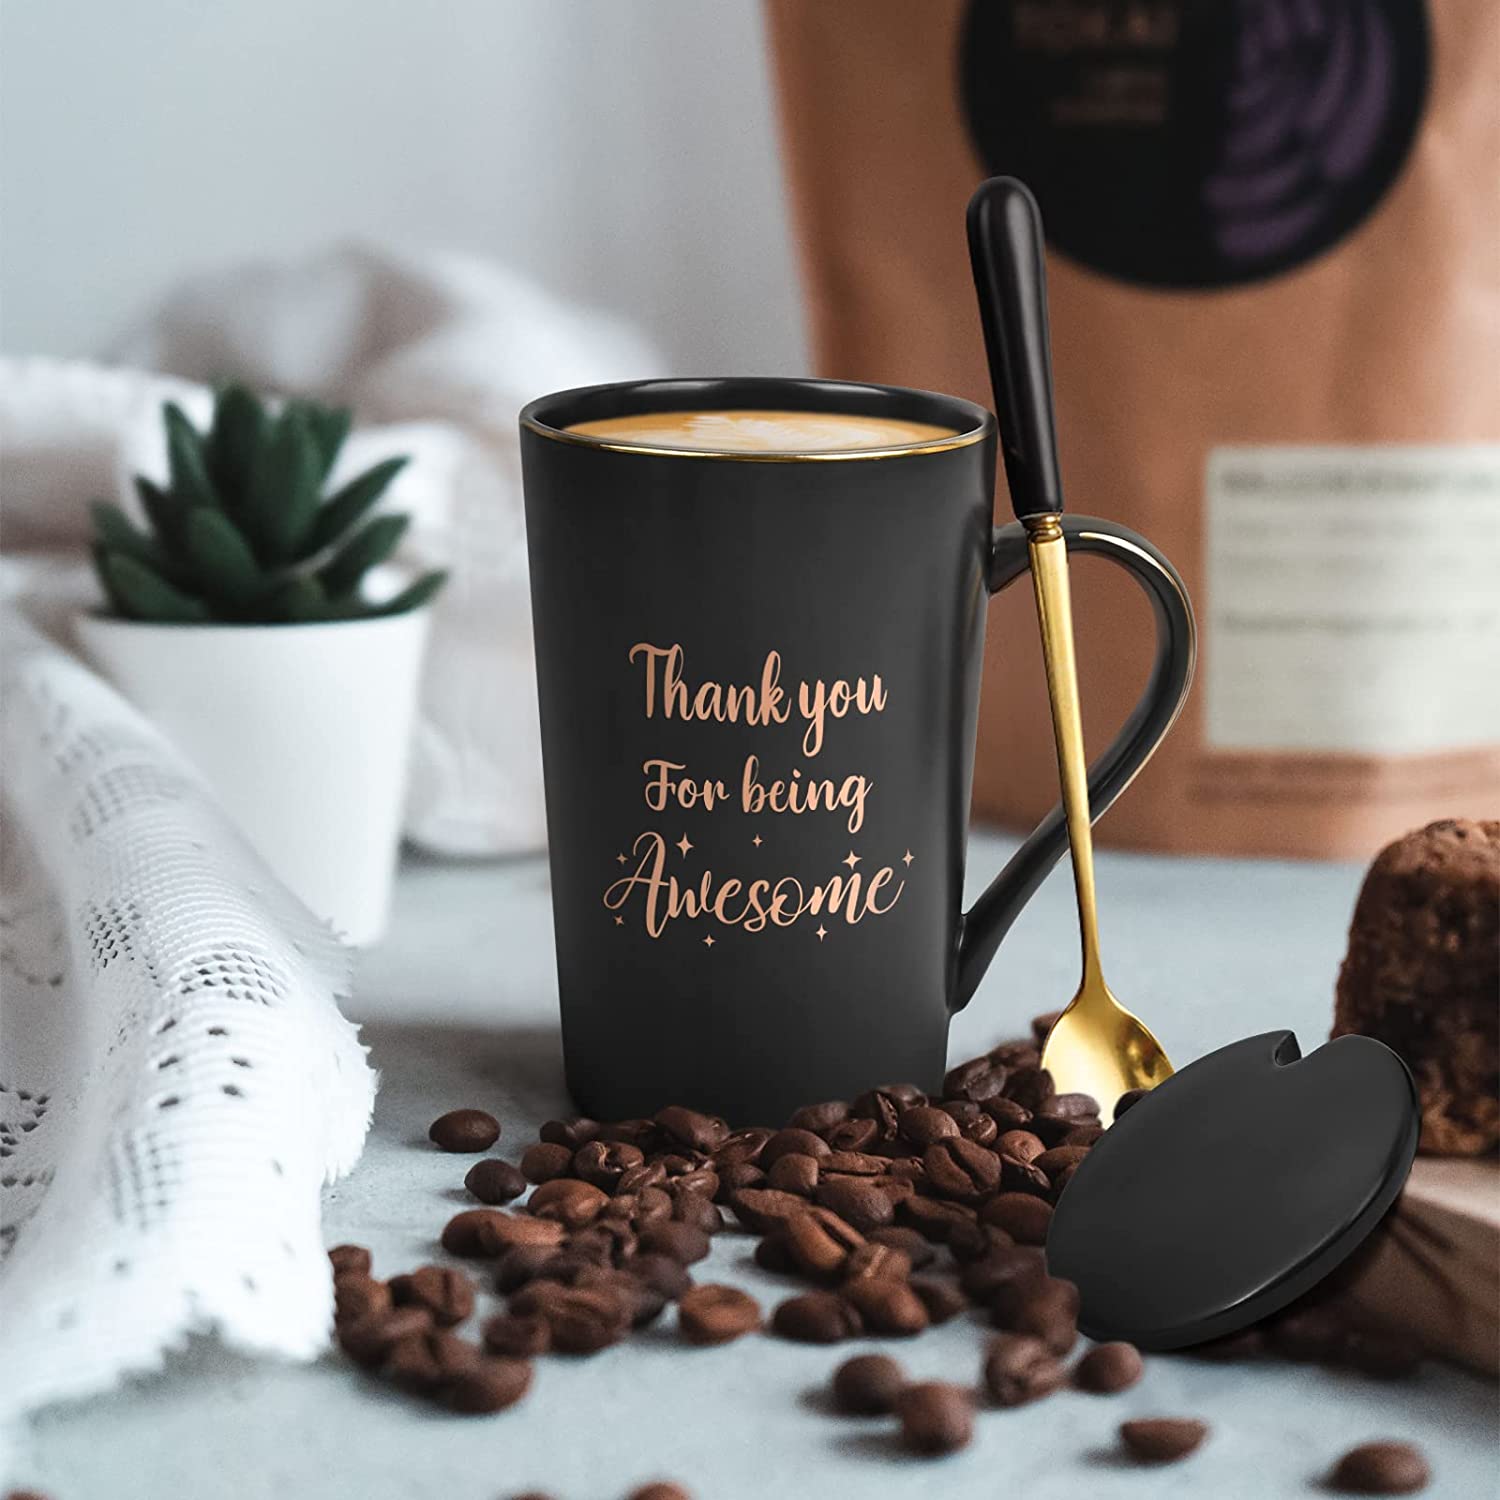 Futtumy Black 14 fl oz Coffee Mugs Ceramic Mug Tea Cup, Thank You for Being Awesome Mug, Inspirational Christmas Birthday Gifts for Men Women Friends, Thank You Gifts for Mug - image 3 of 10